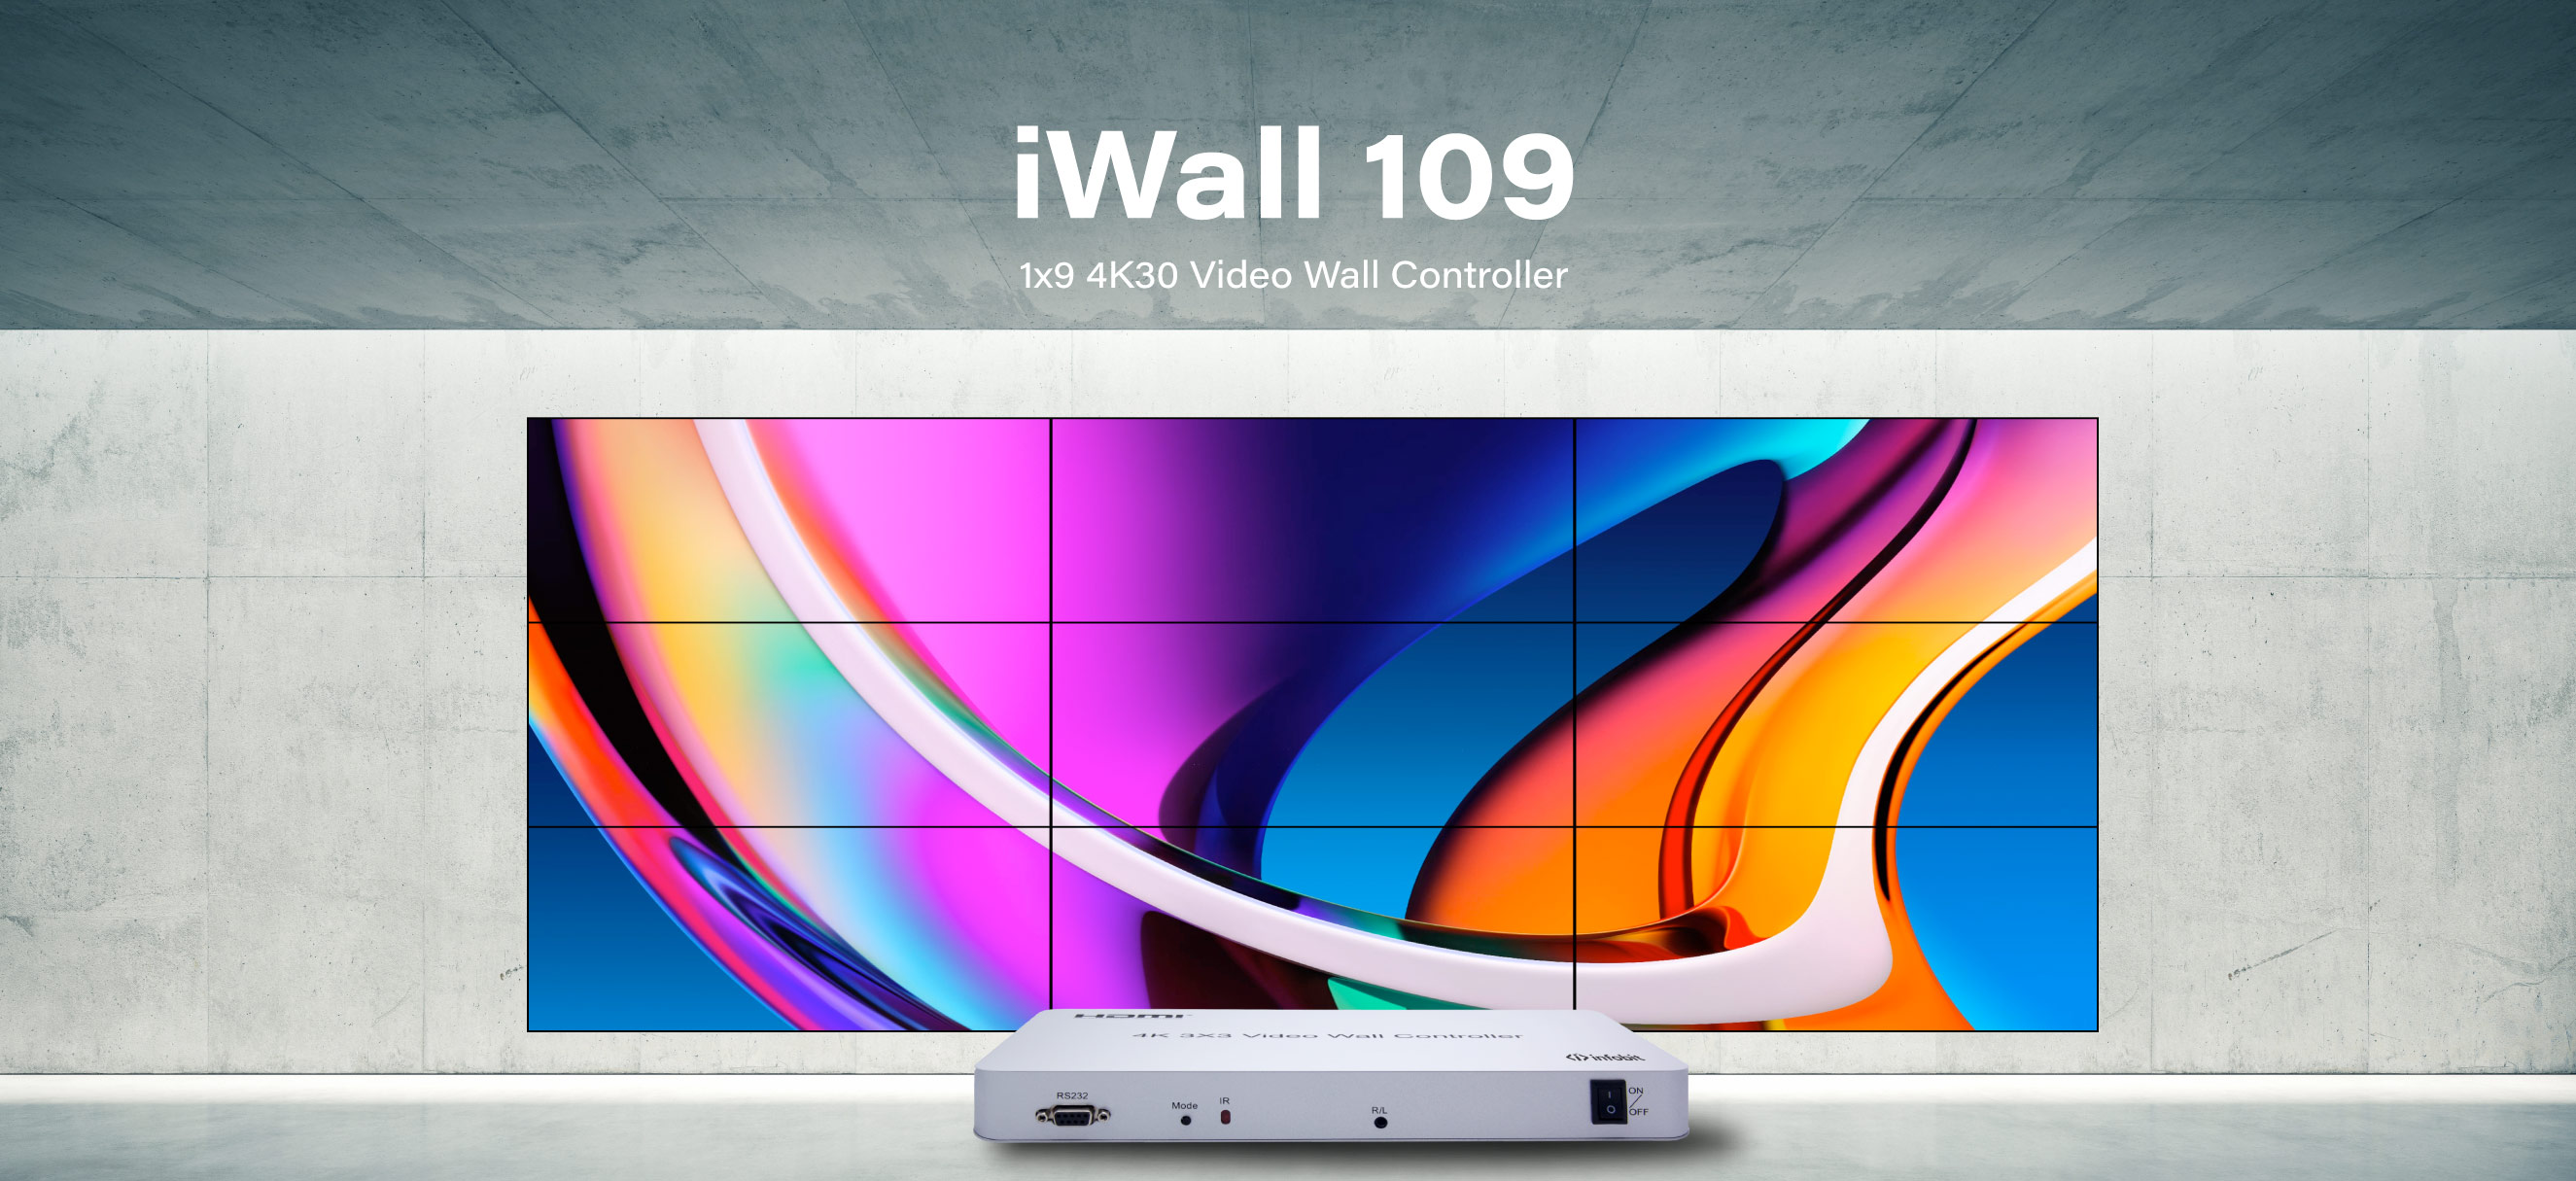 iWall 109 Video Wall Controller